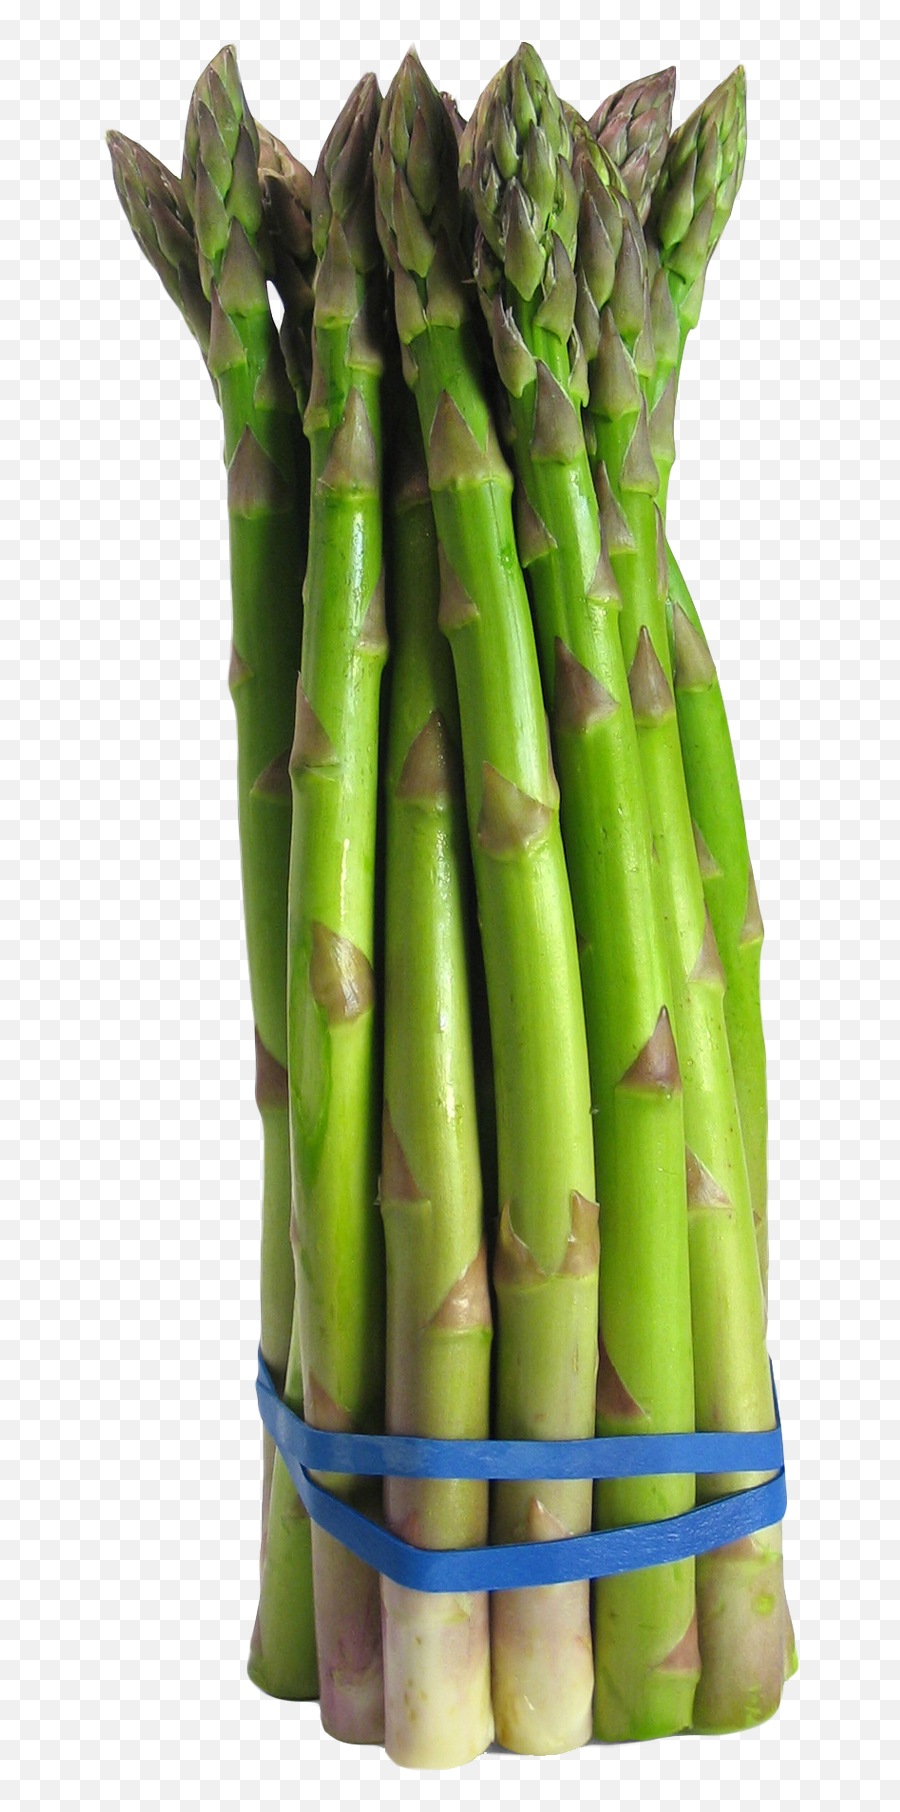 Download Asparagus Png Image For Free - Asparagus Png,Sugarcane Png